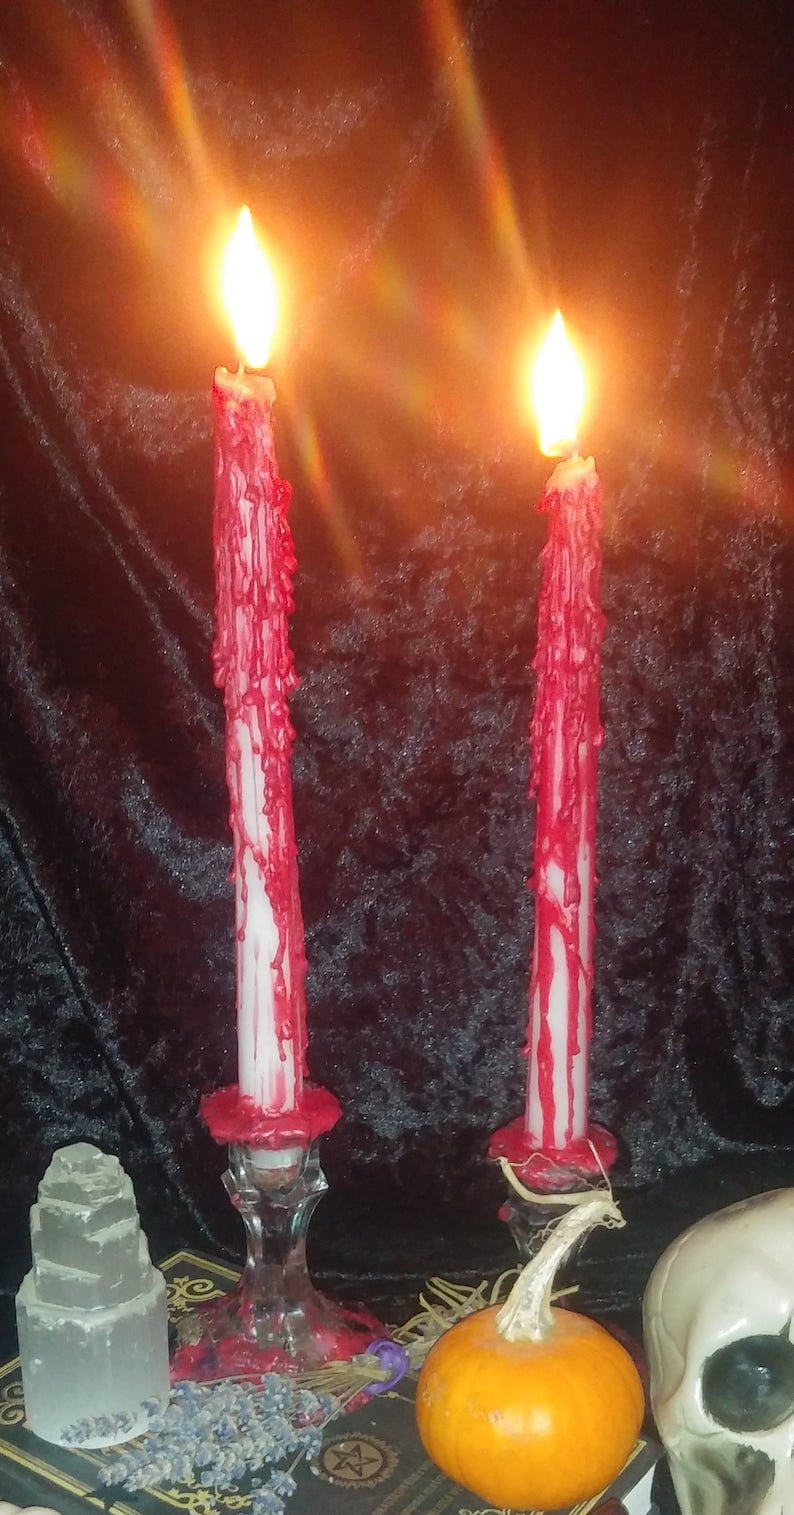 Bleeding Taper Candles